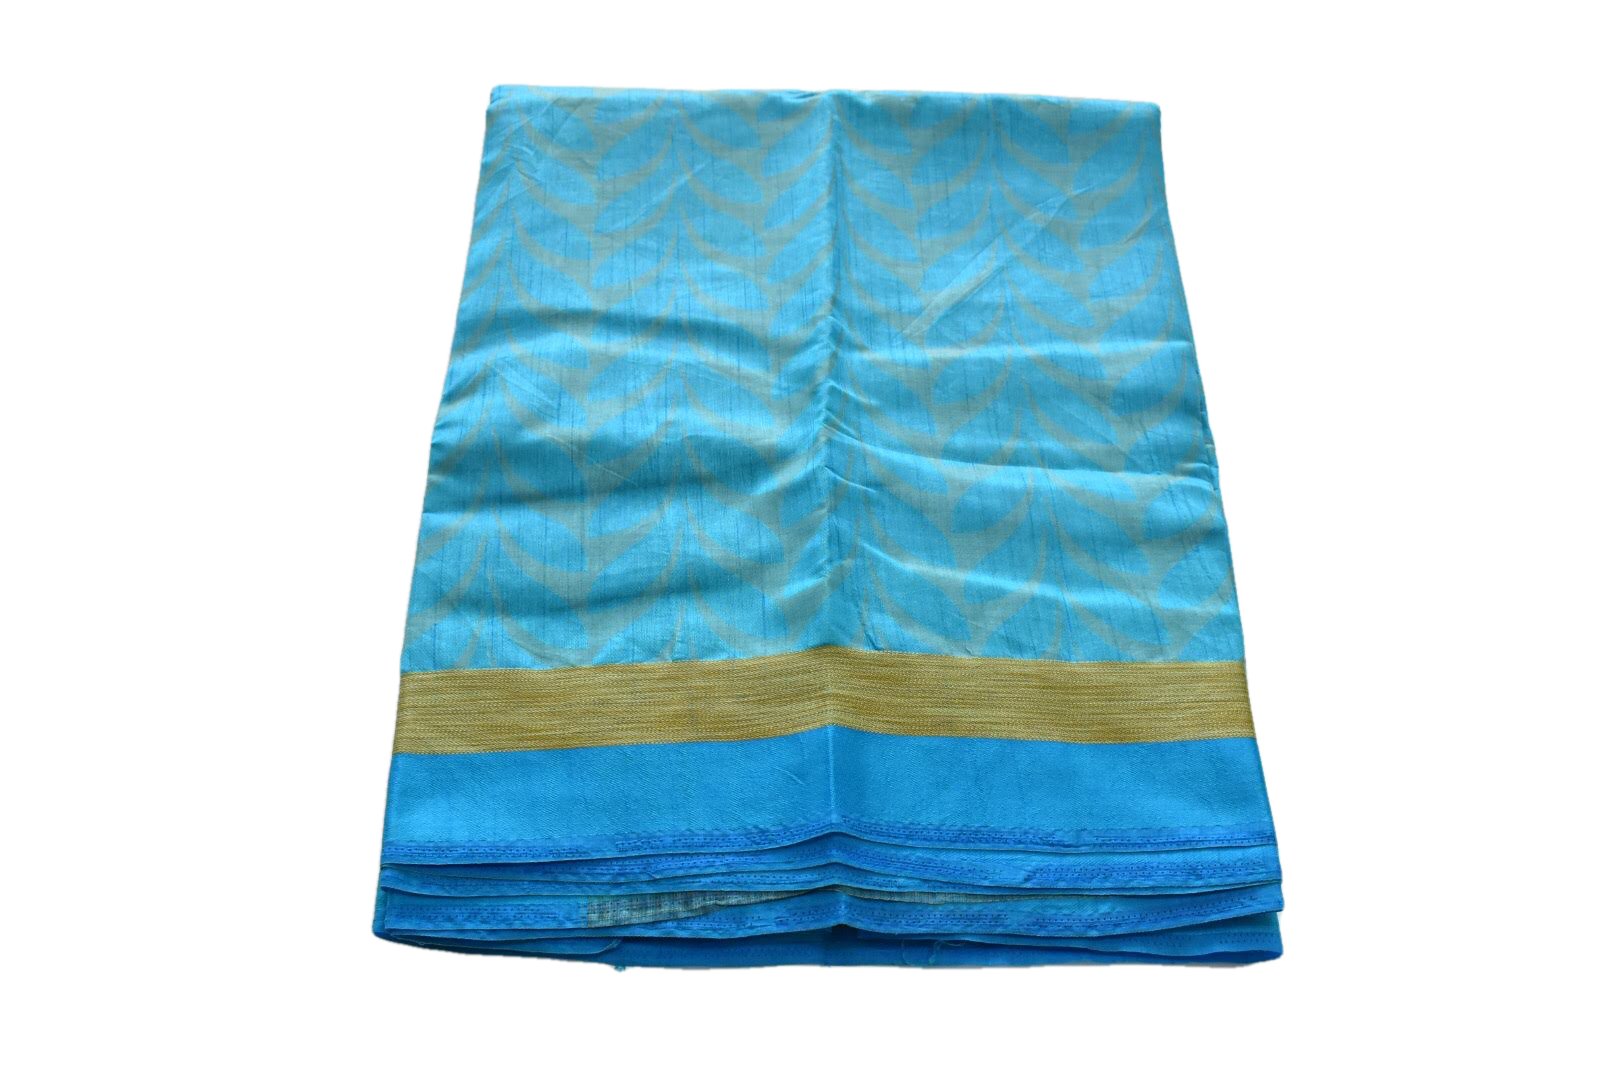 Blue Color - Silk Organza Saree - Leaf Pattern and Gold Thread Border